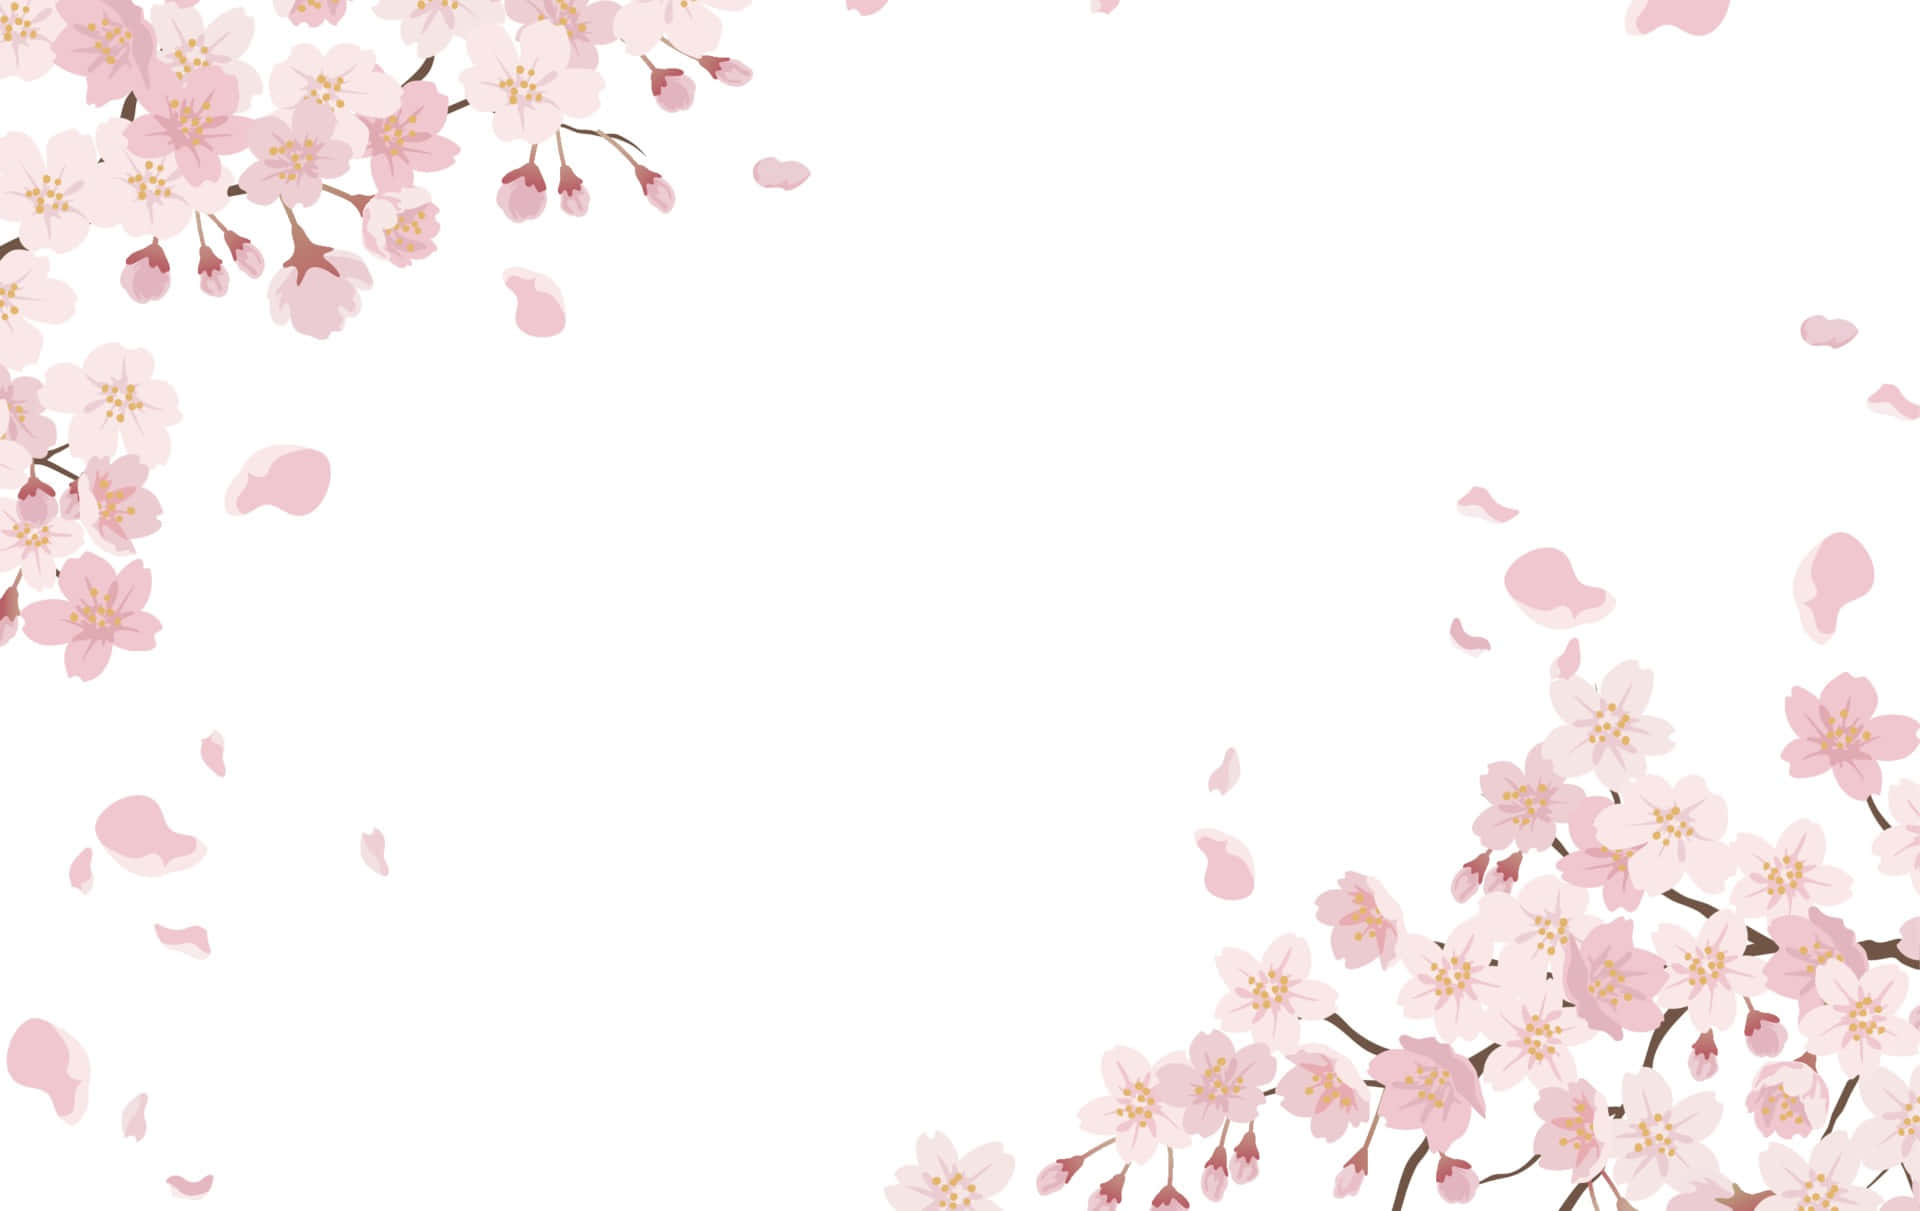 Enjoy the Summer with a Sakura in Full Bloom